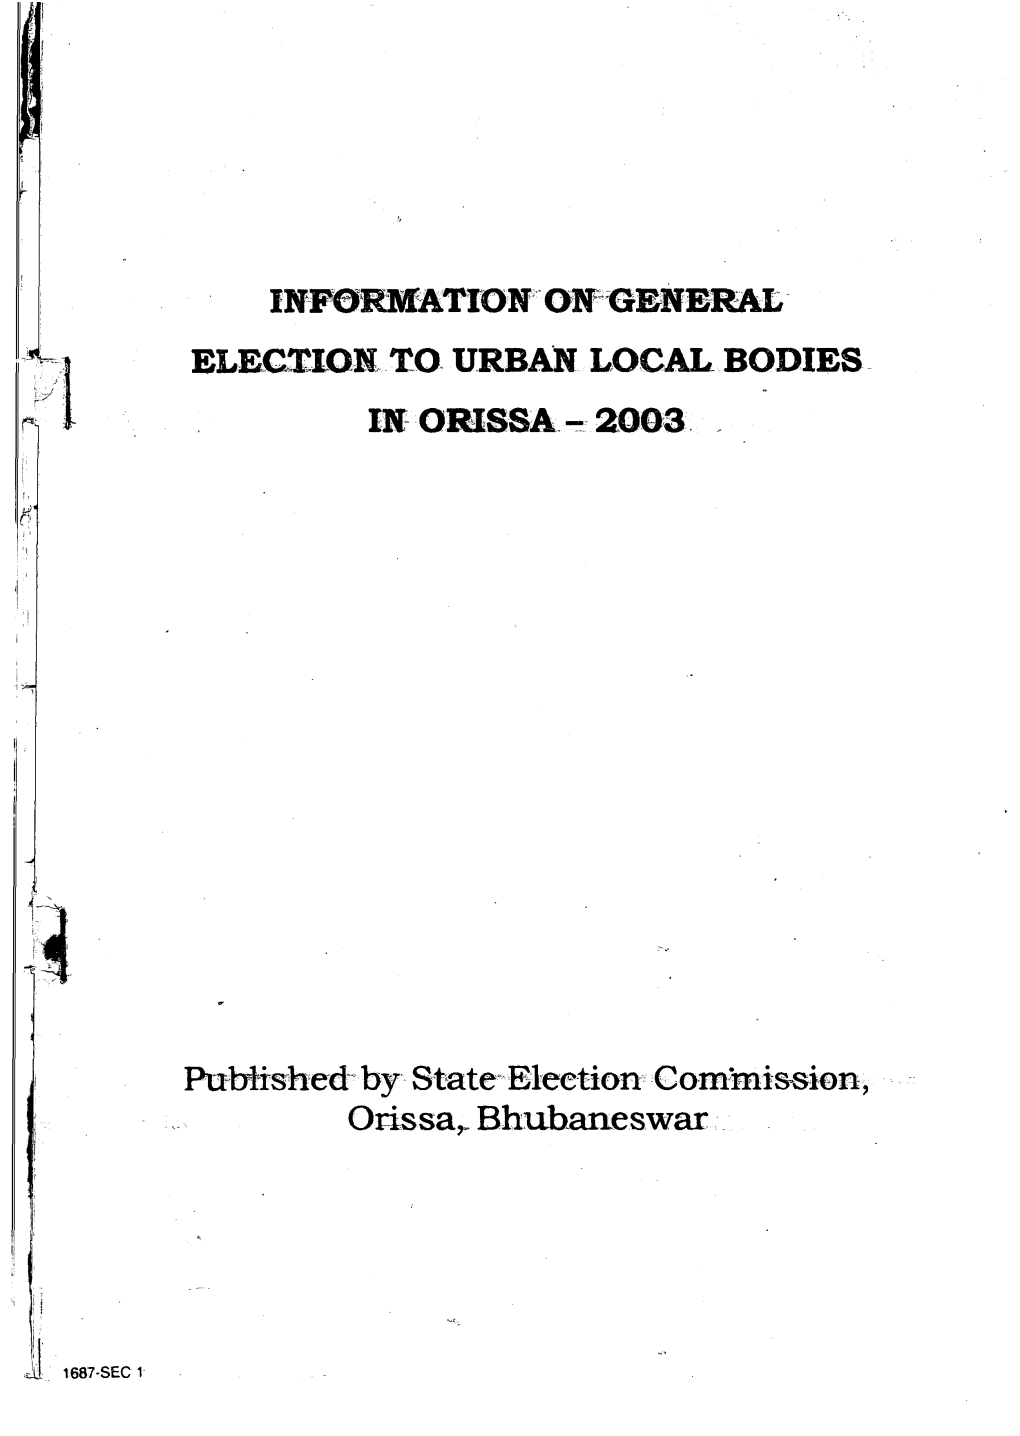 Election to Urban Local Bodies in Orissa - 2003